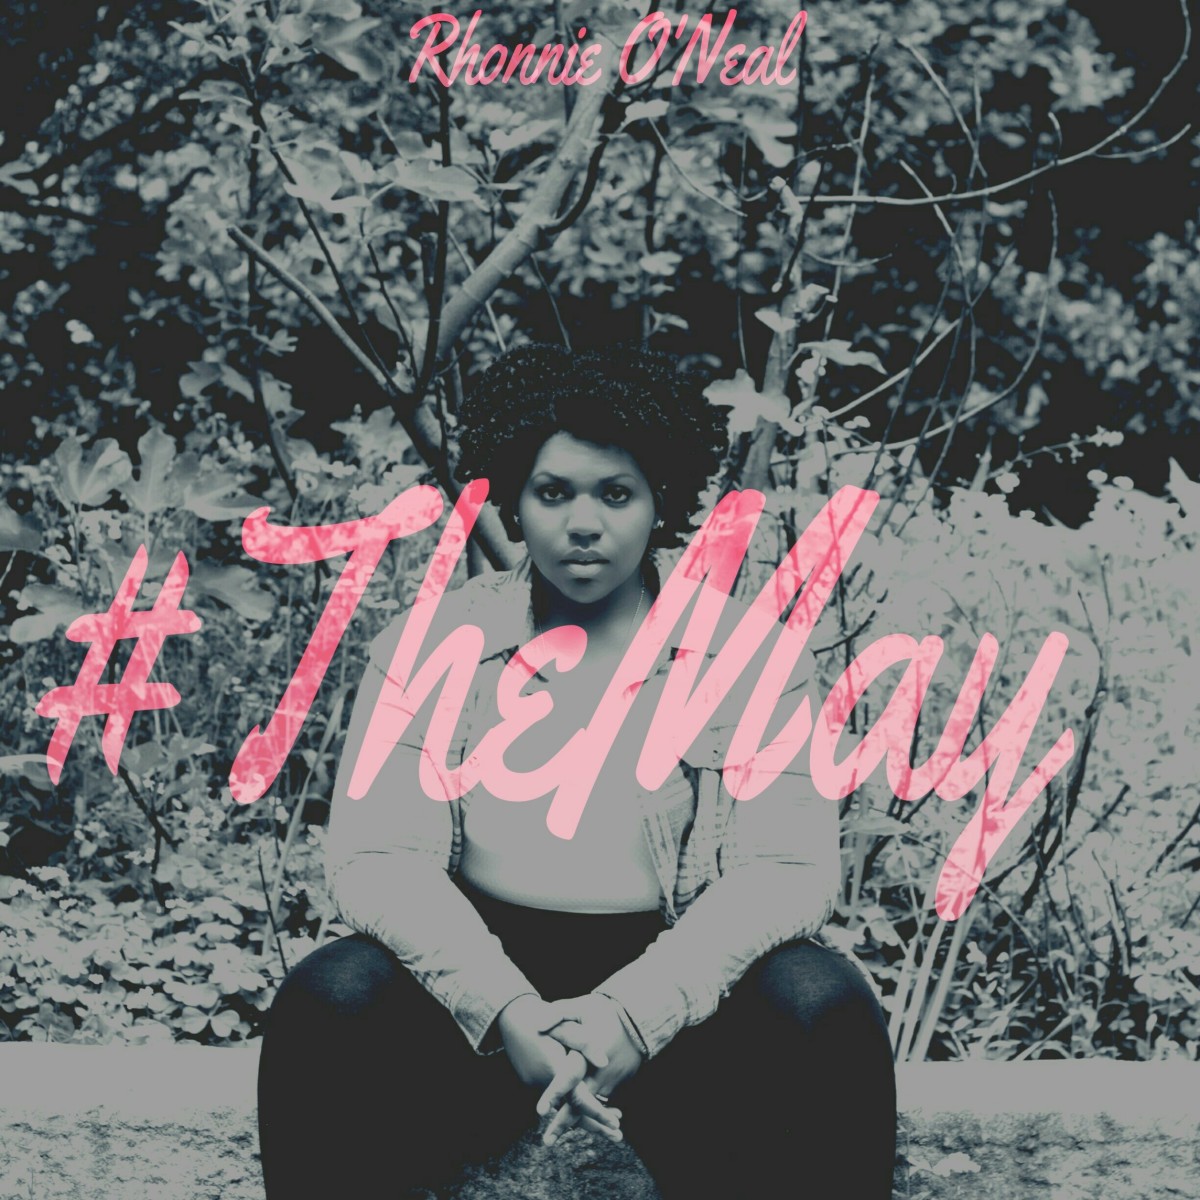 Rhonnie O'Neal - The May